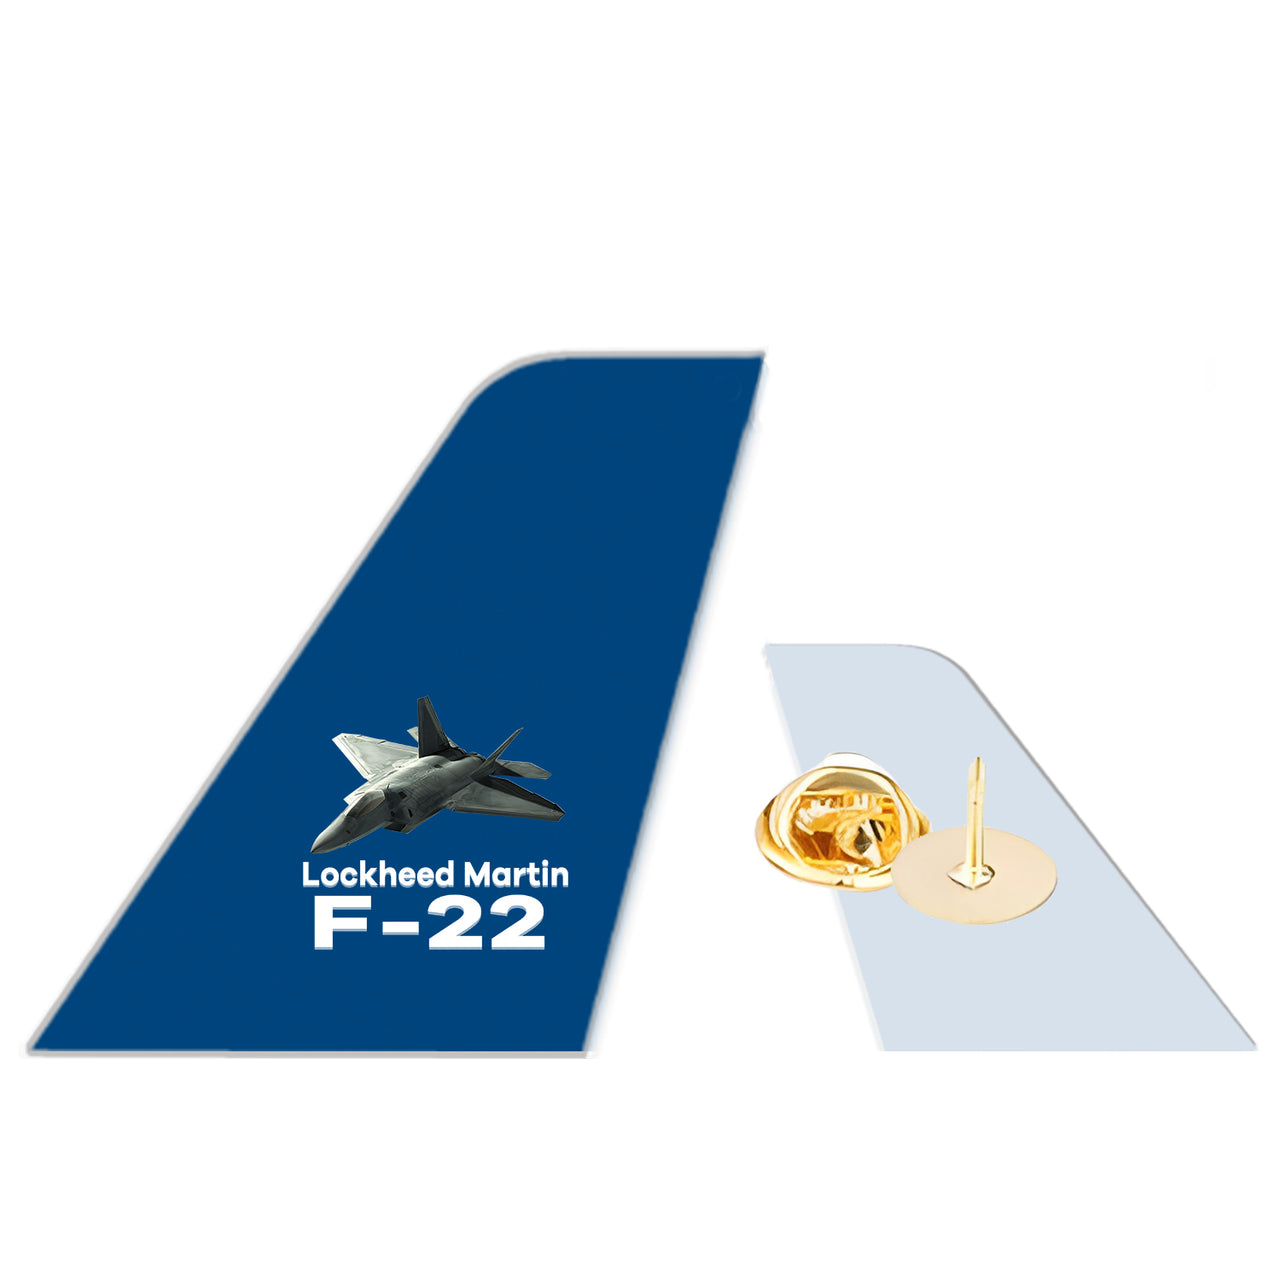 The Lockheed Martin F22 Designed Tail Shape Badges & Pins